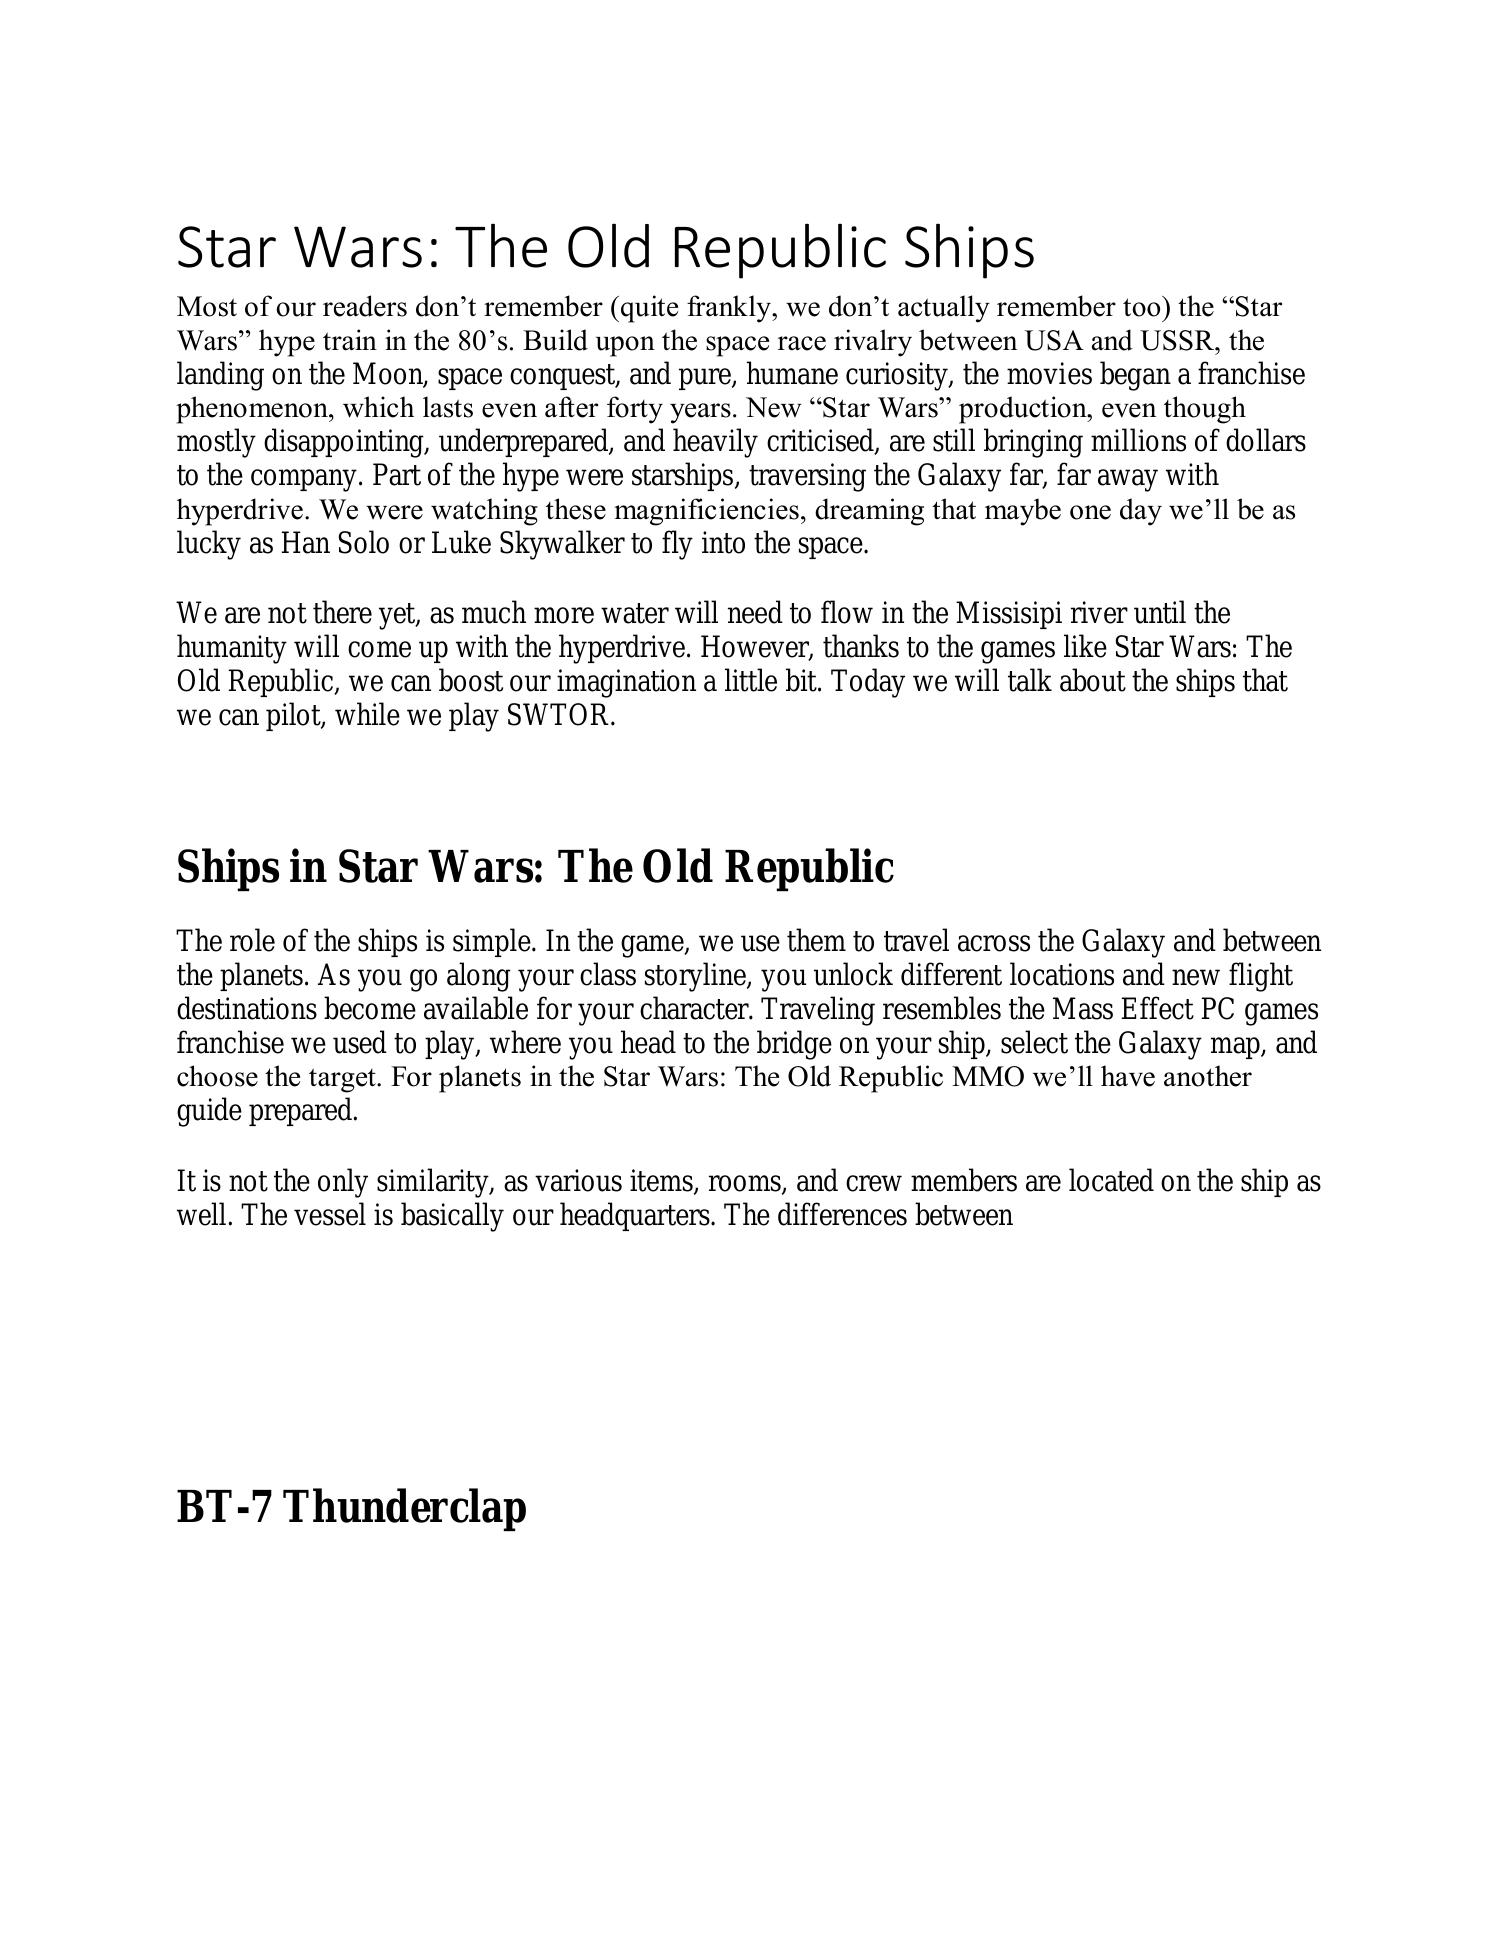 star wars research paper topics